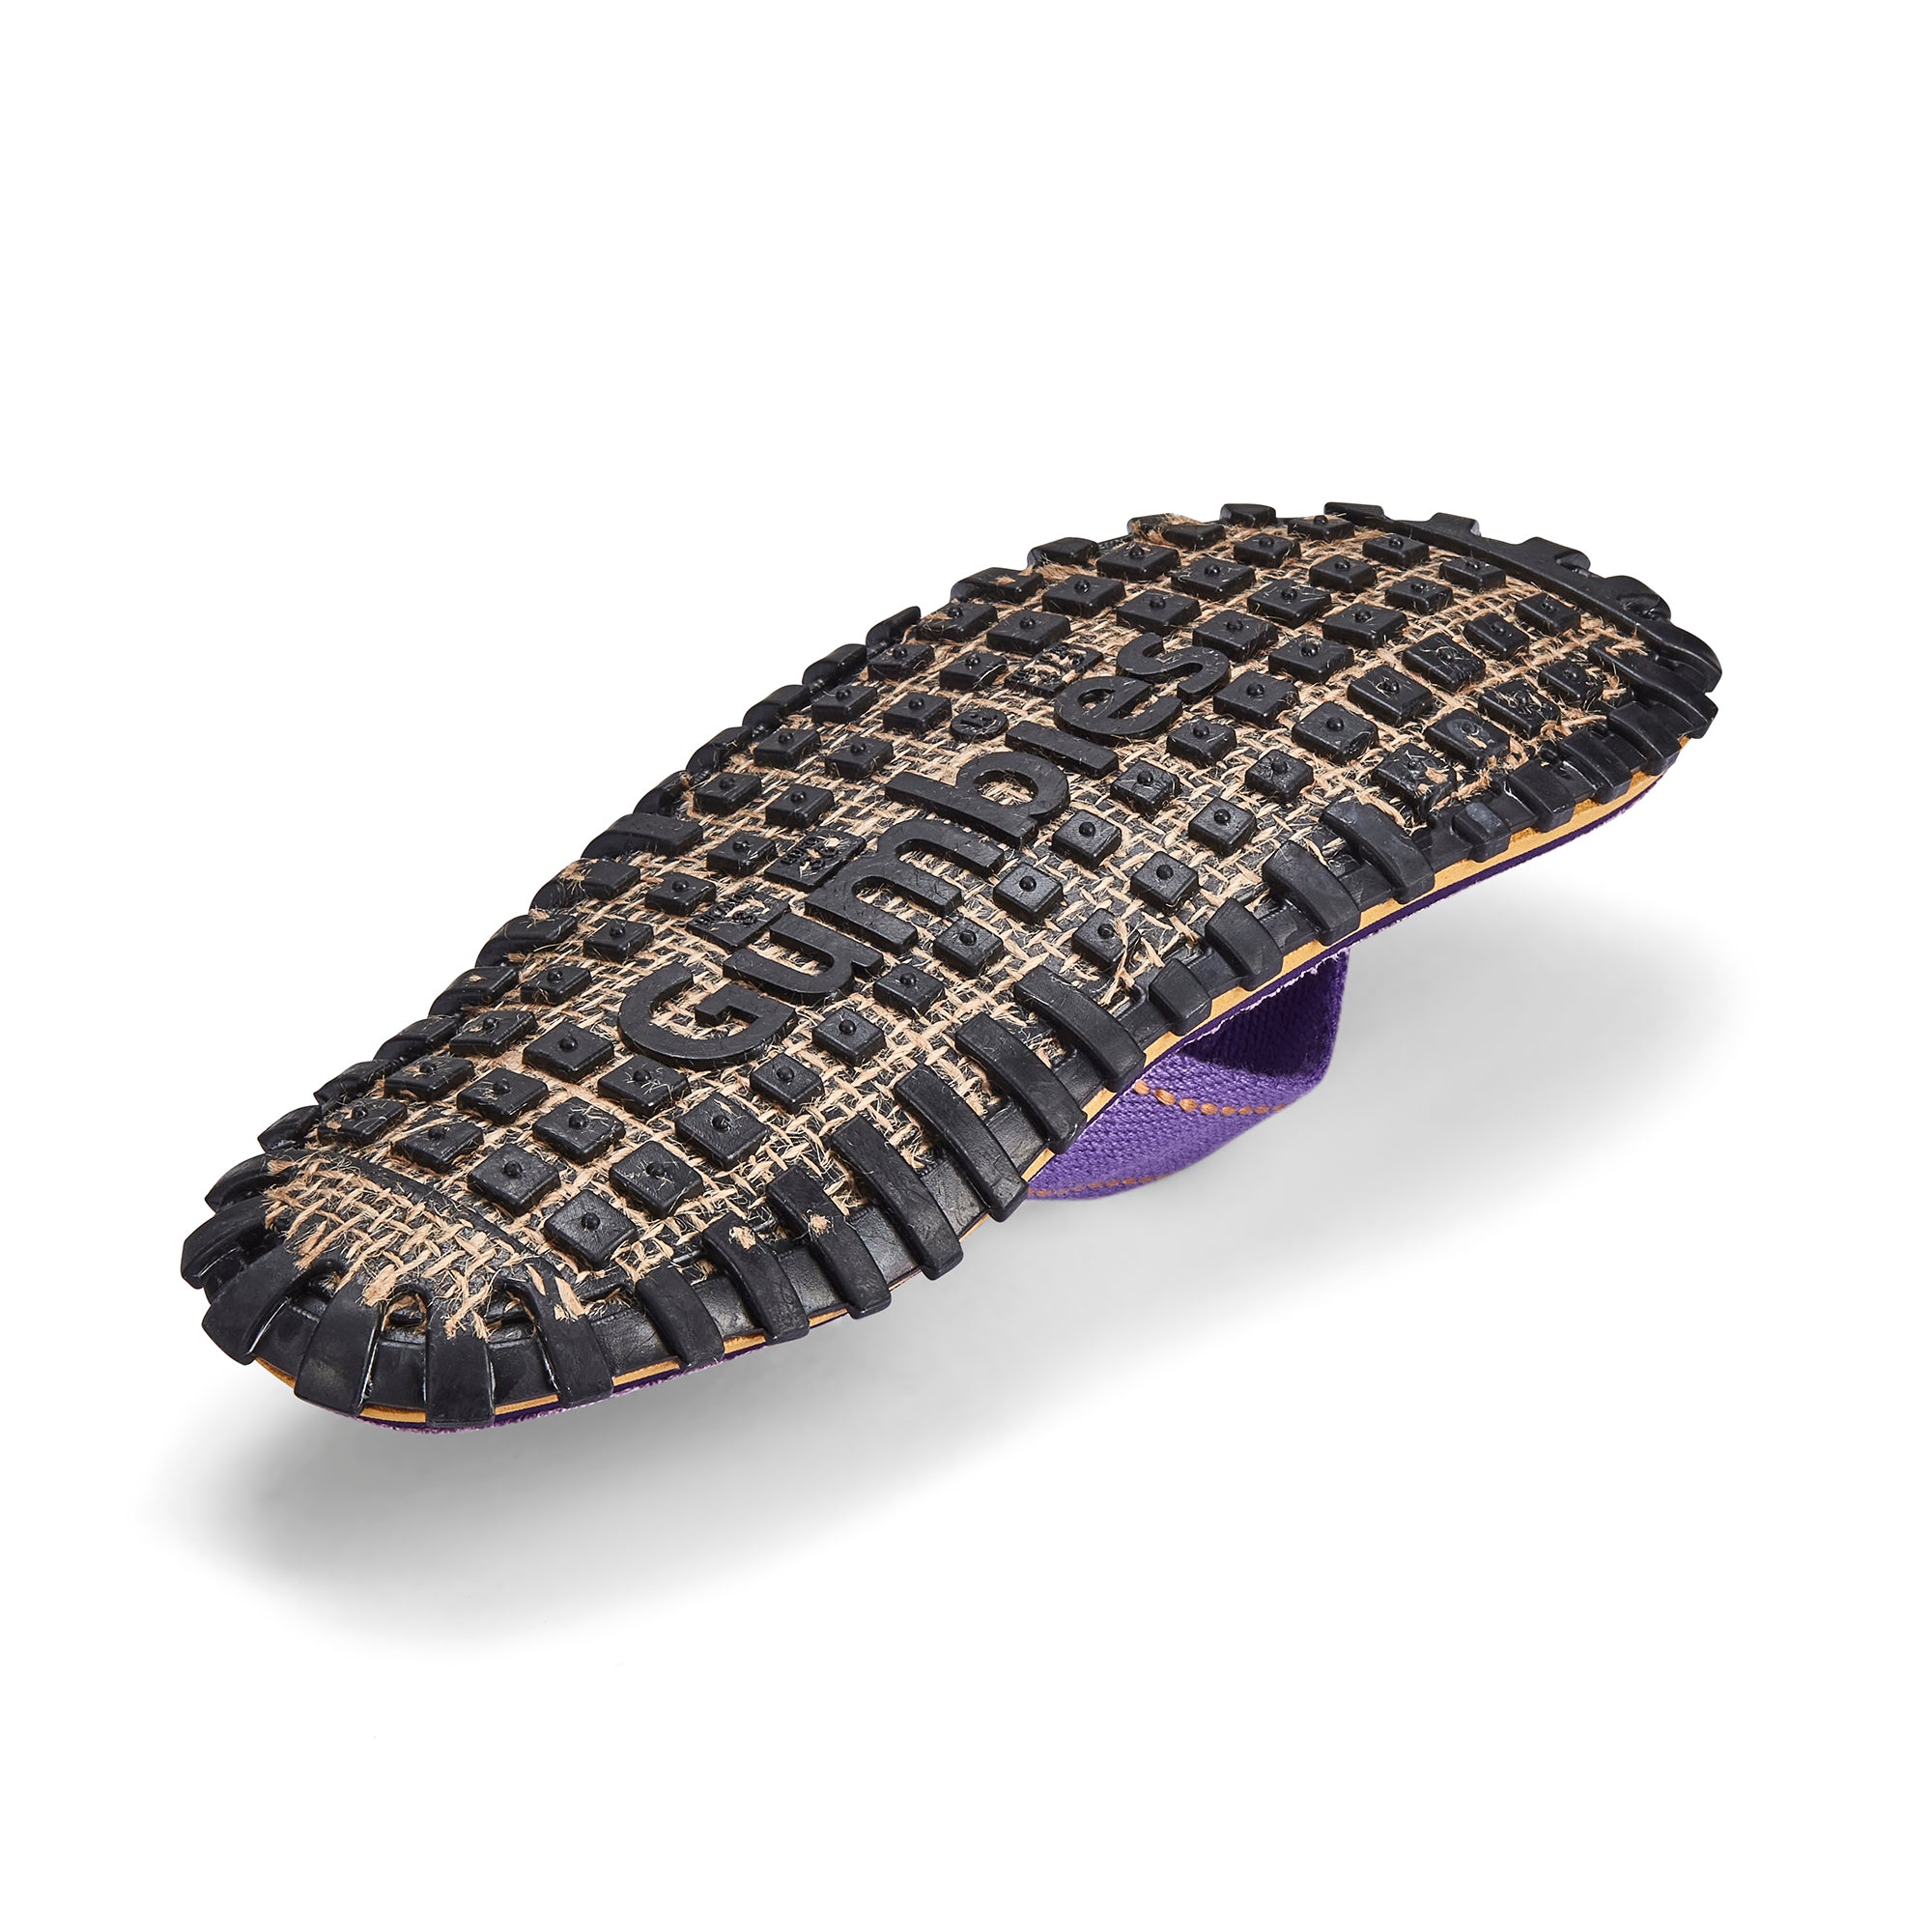 Islander Flip-Flops - Women's - Classic Purple